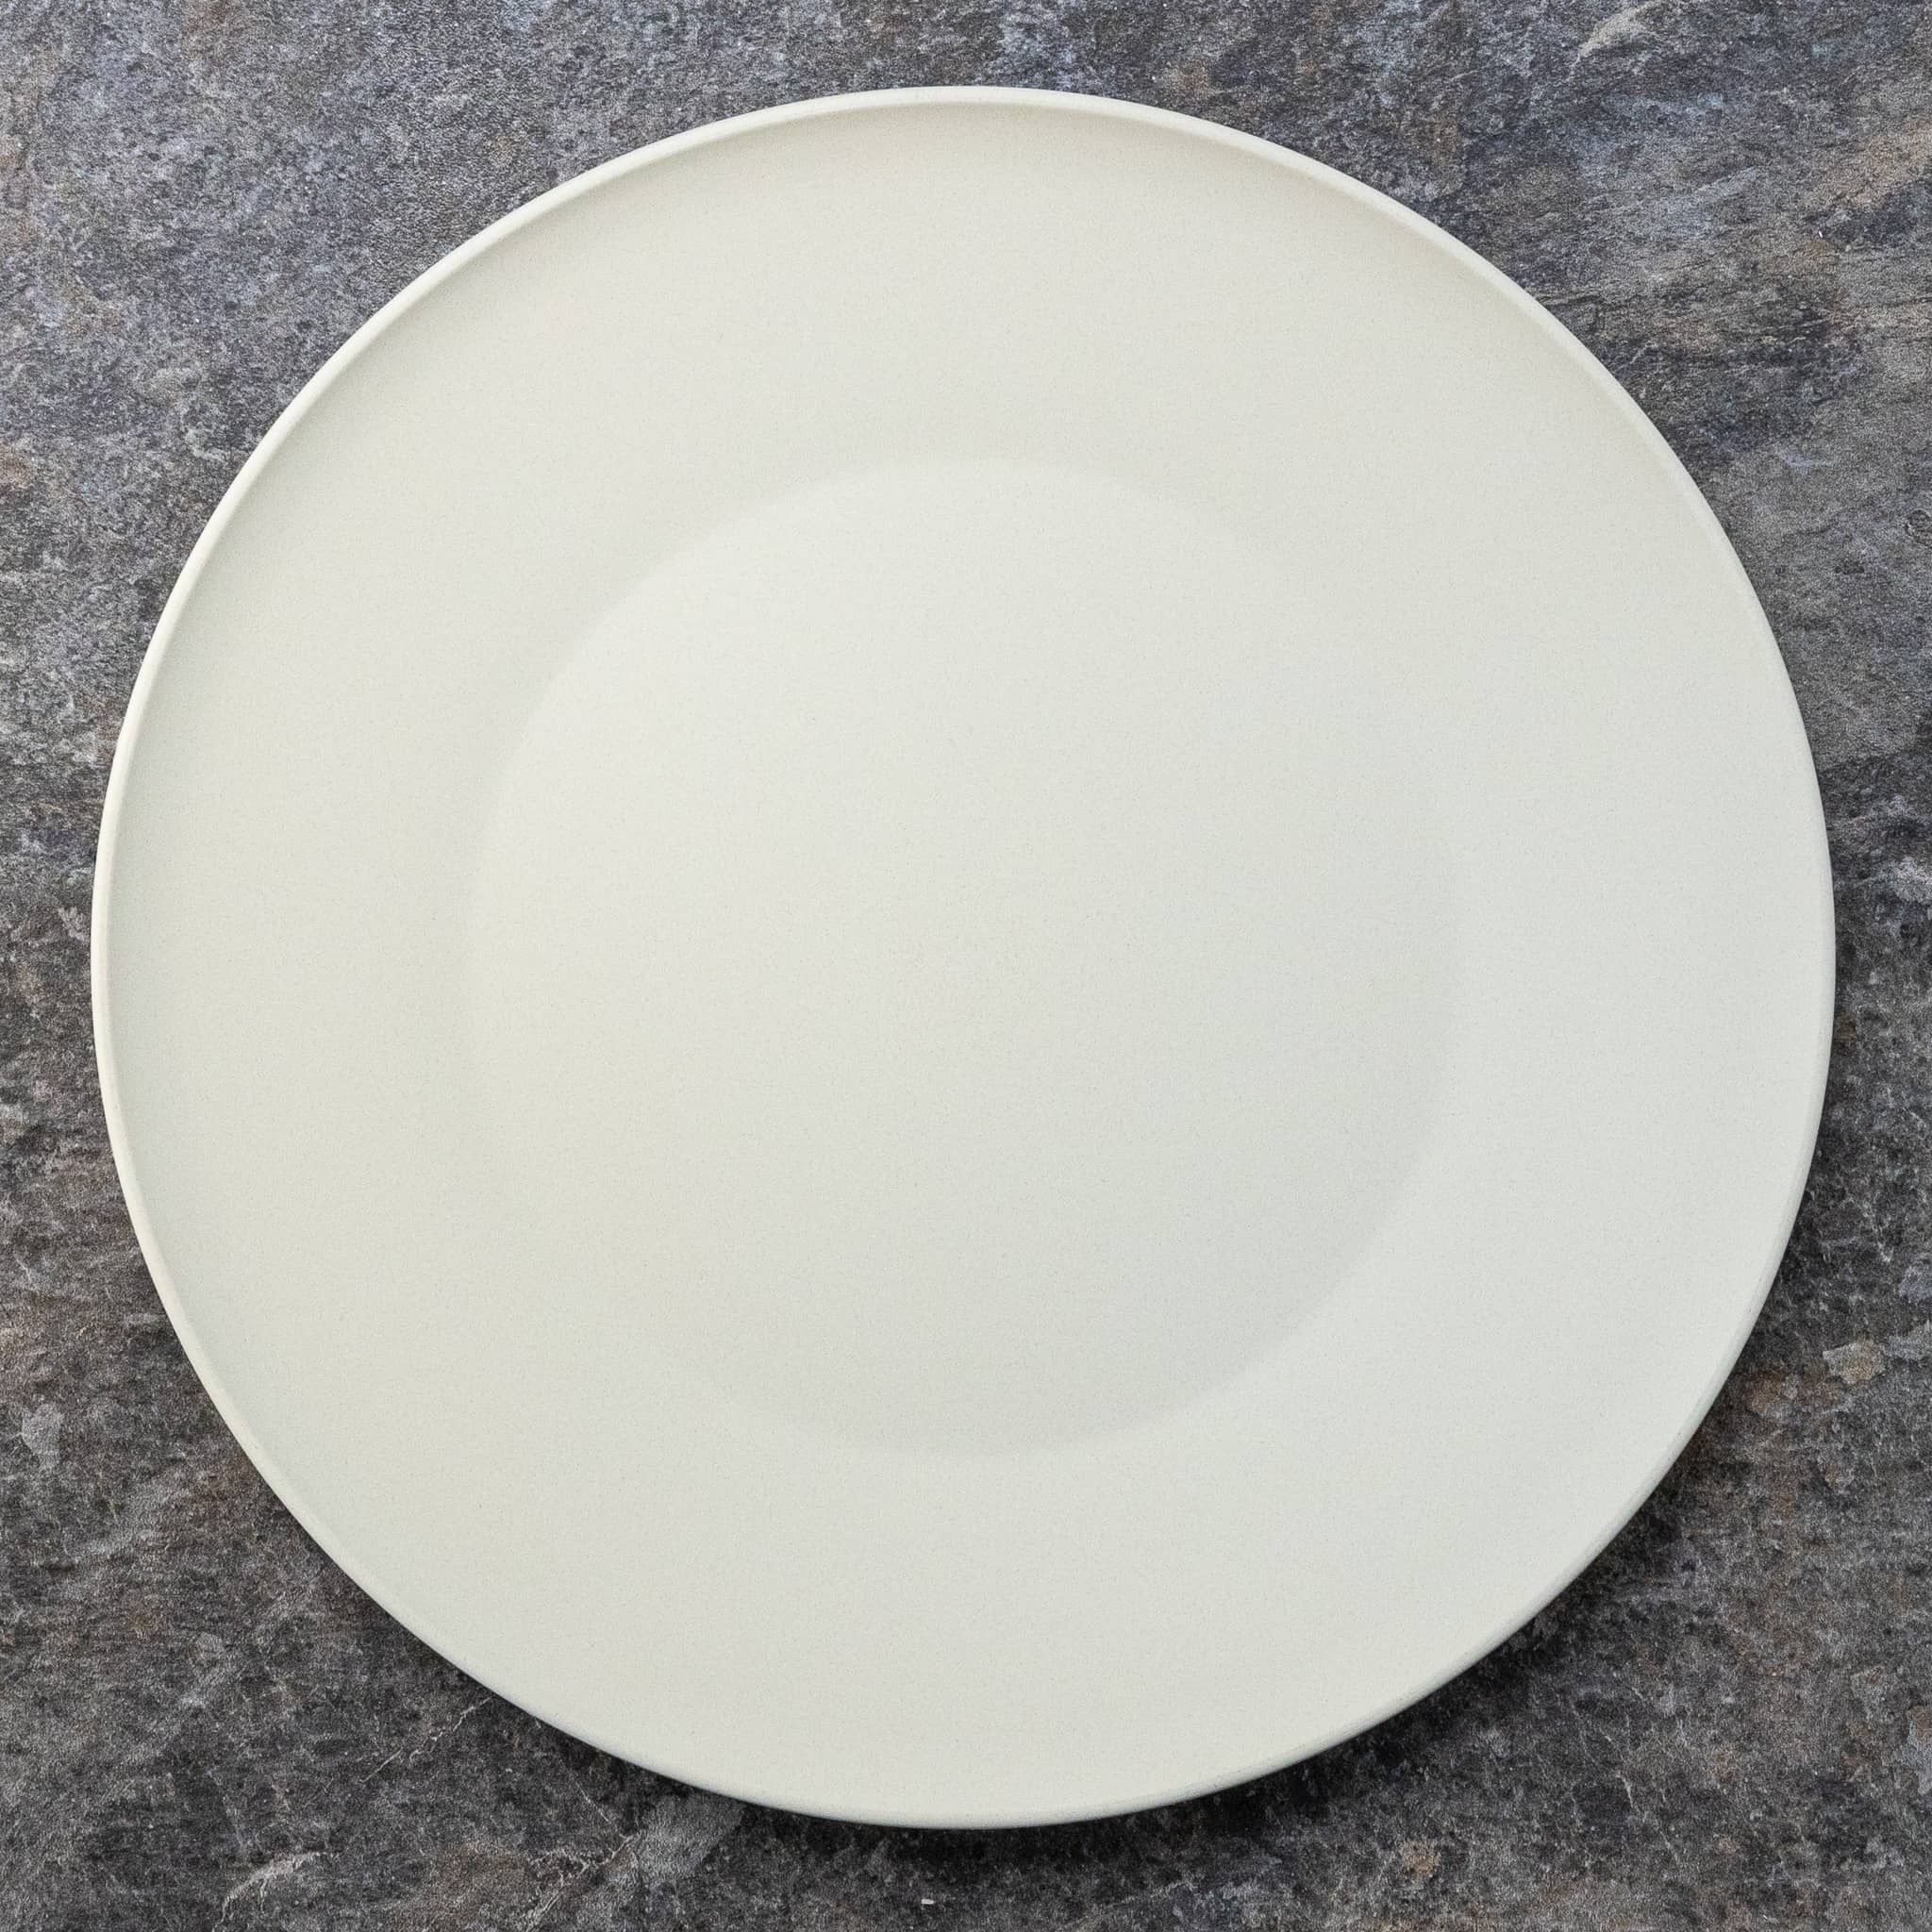 Microwave-Safe Plates & Microwaveable Plate Sets